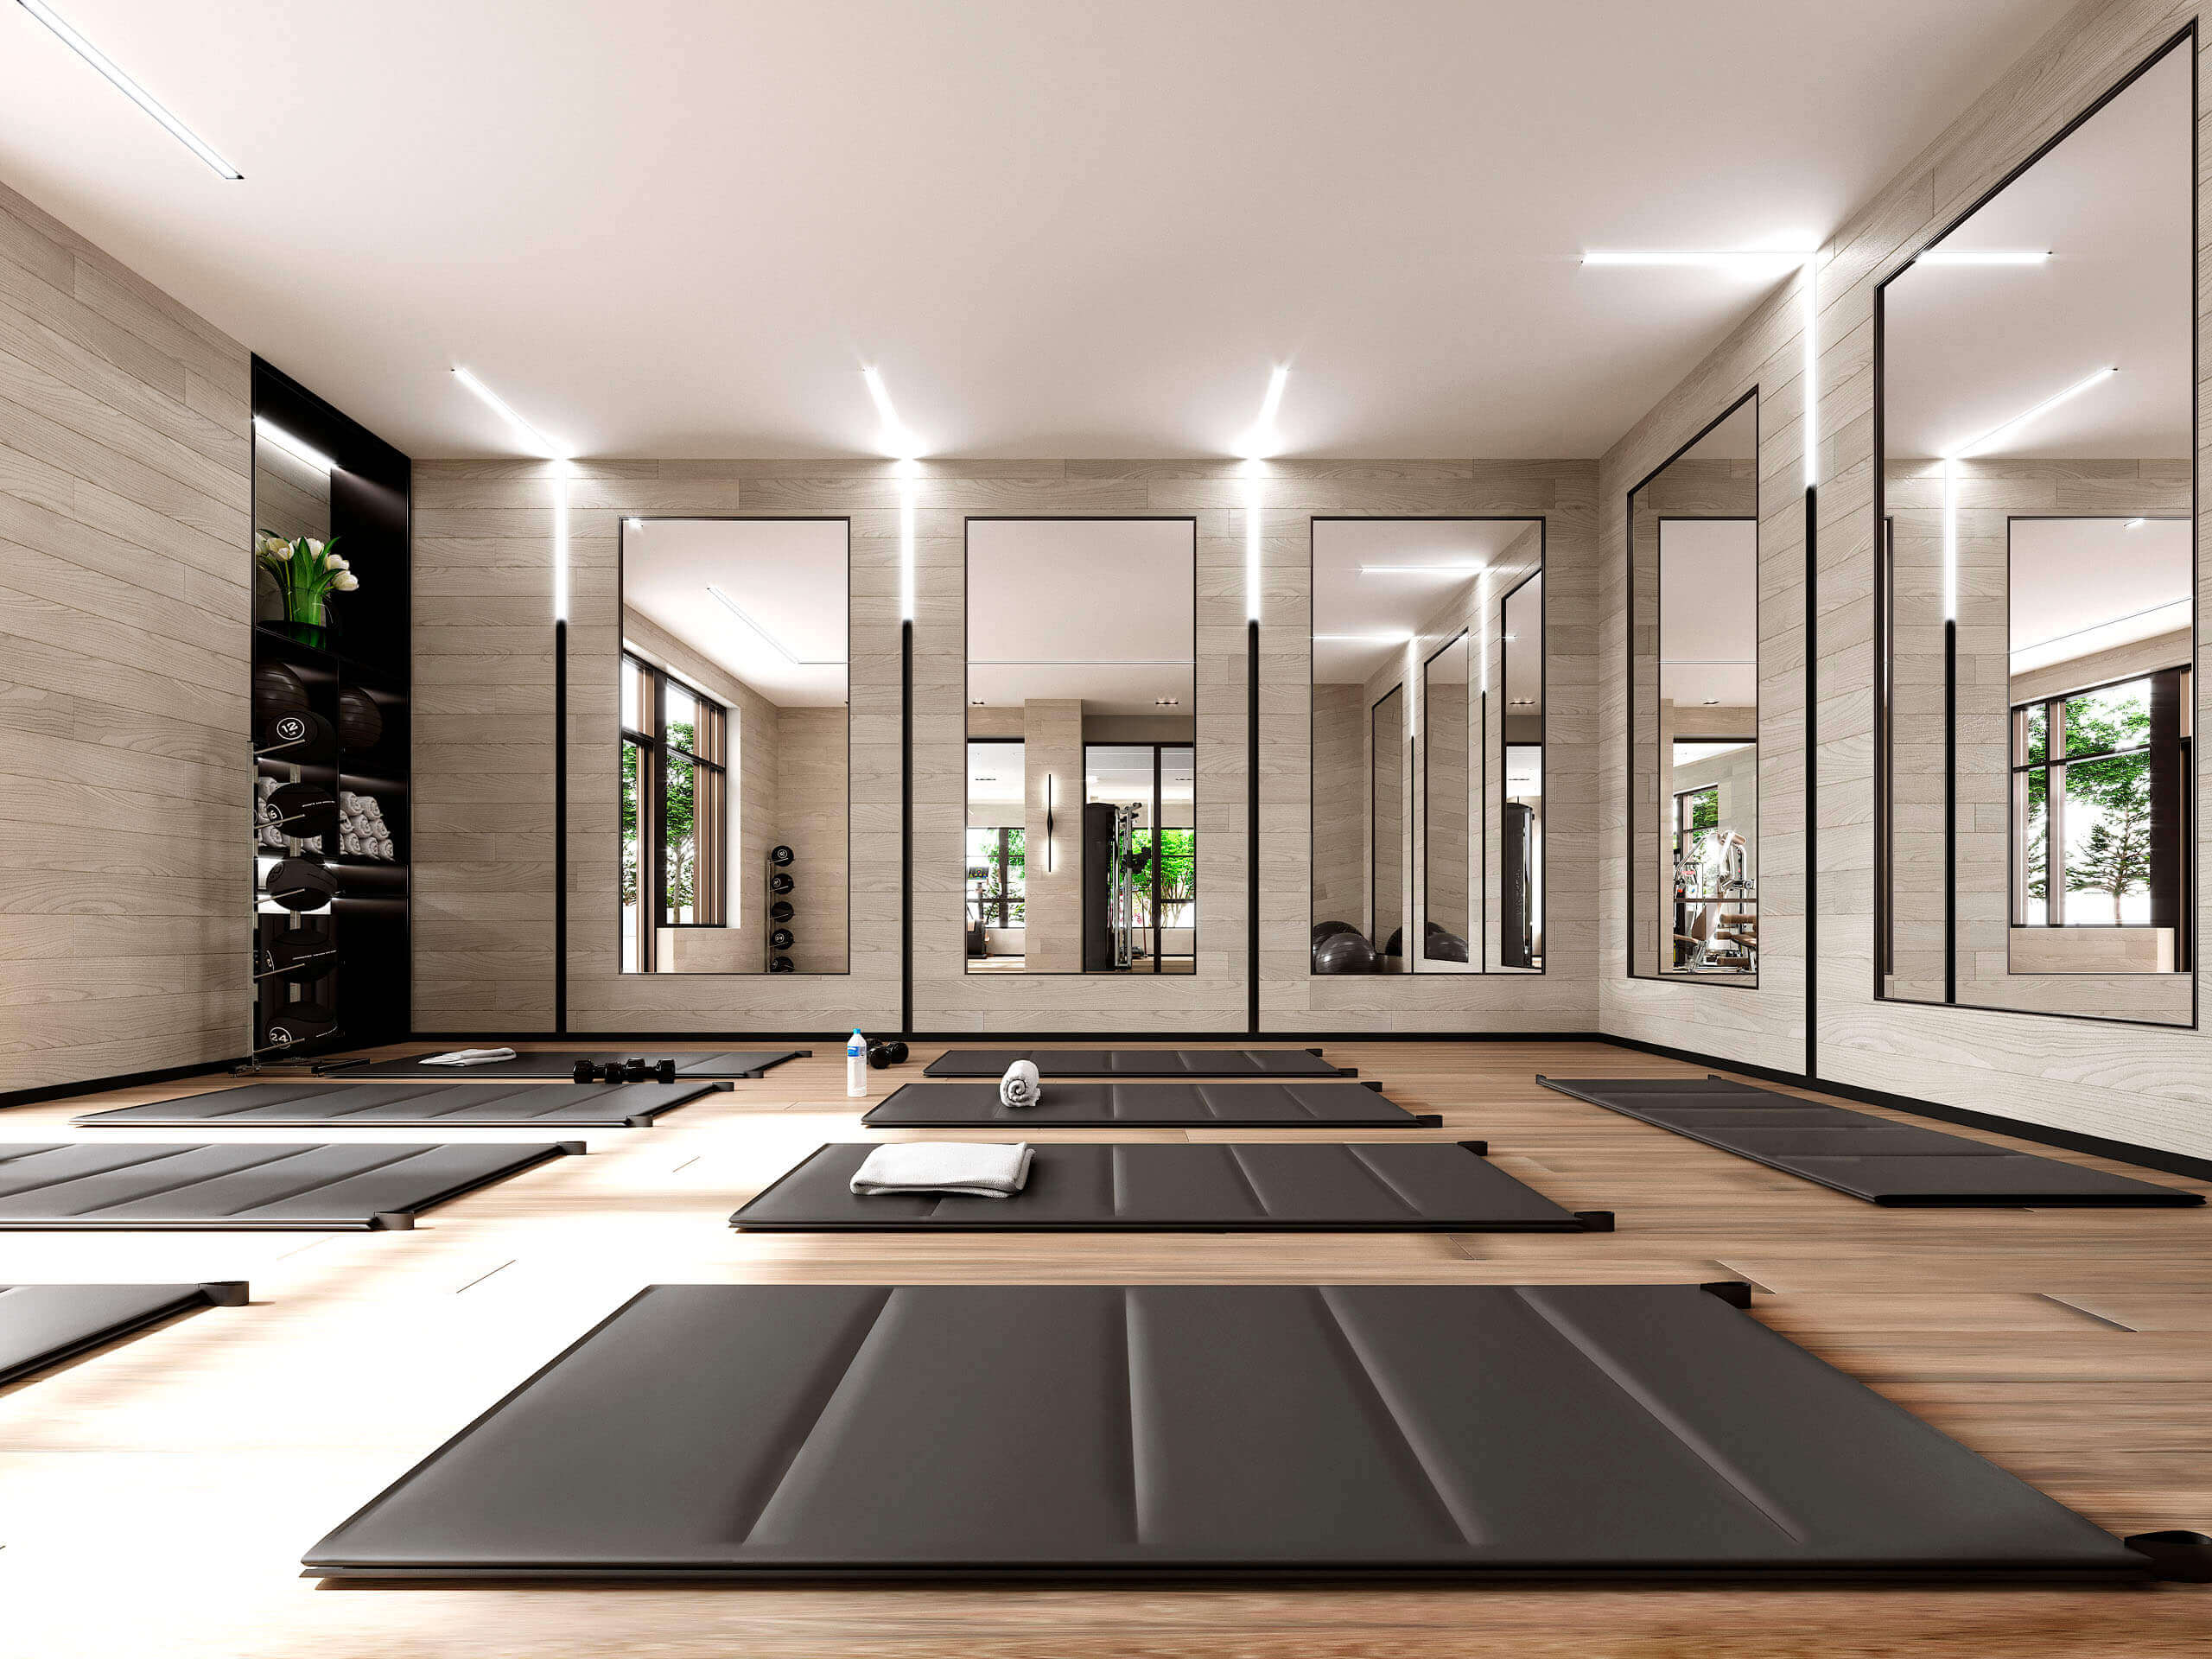 Interior Amenity Rendering - Gym Yoga Fitness Center